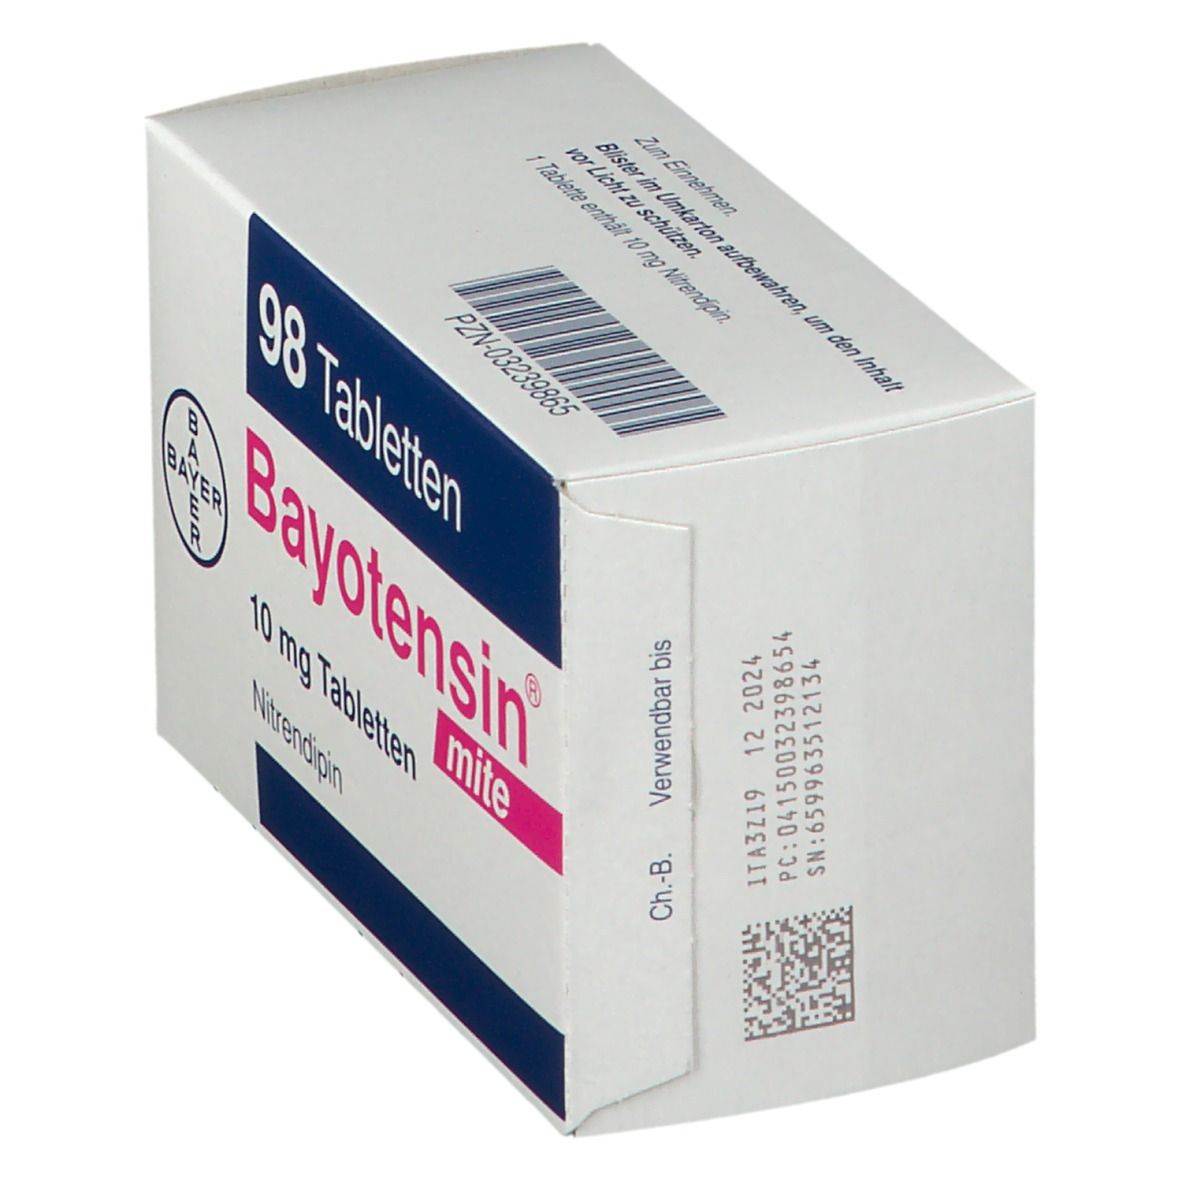 Bayotensin® mite 10 mg